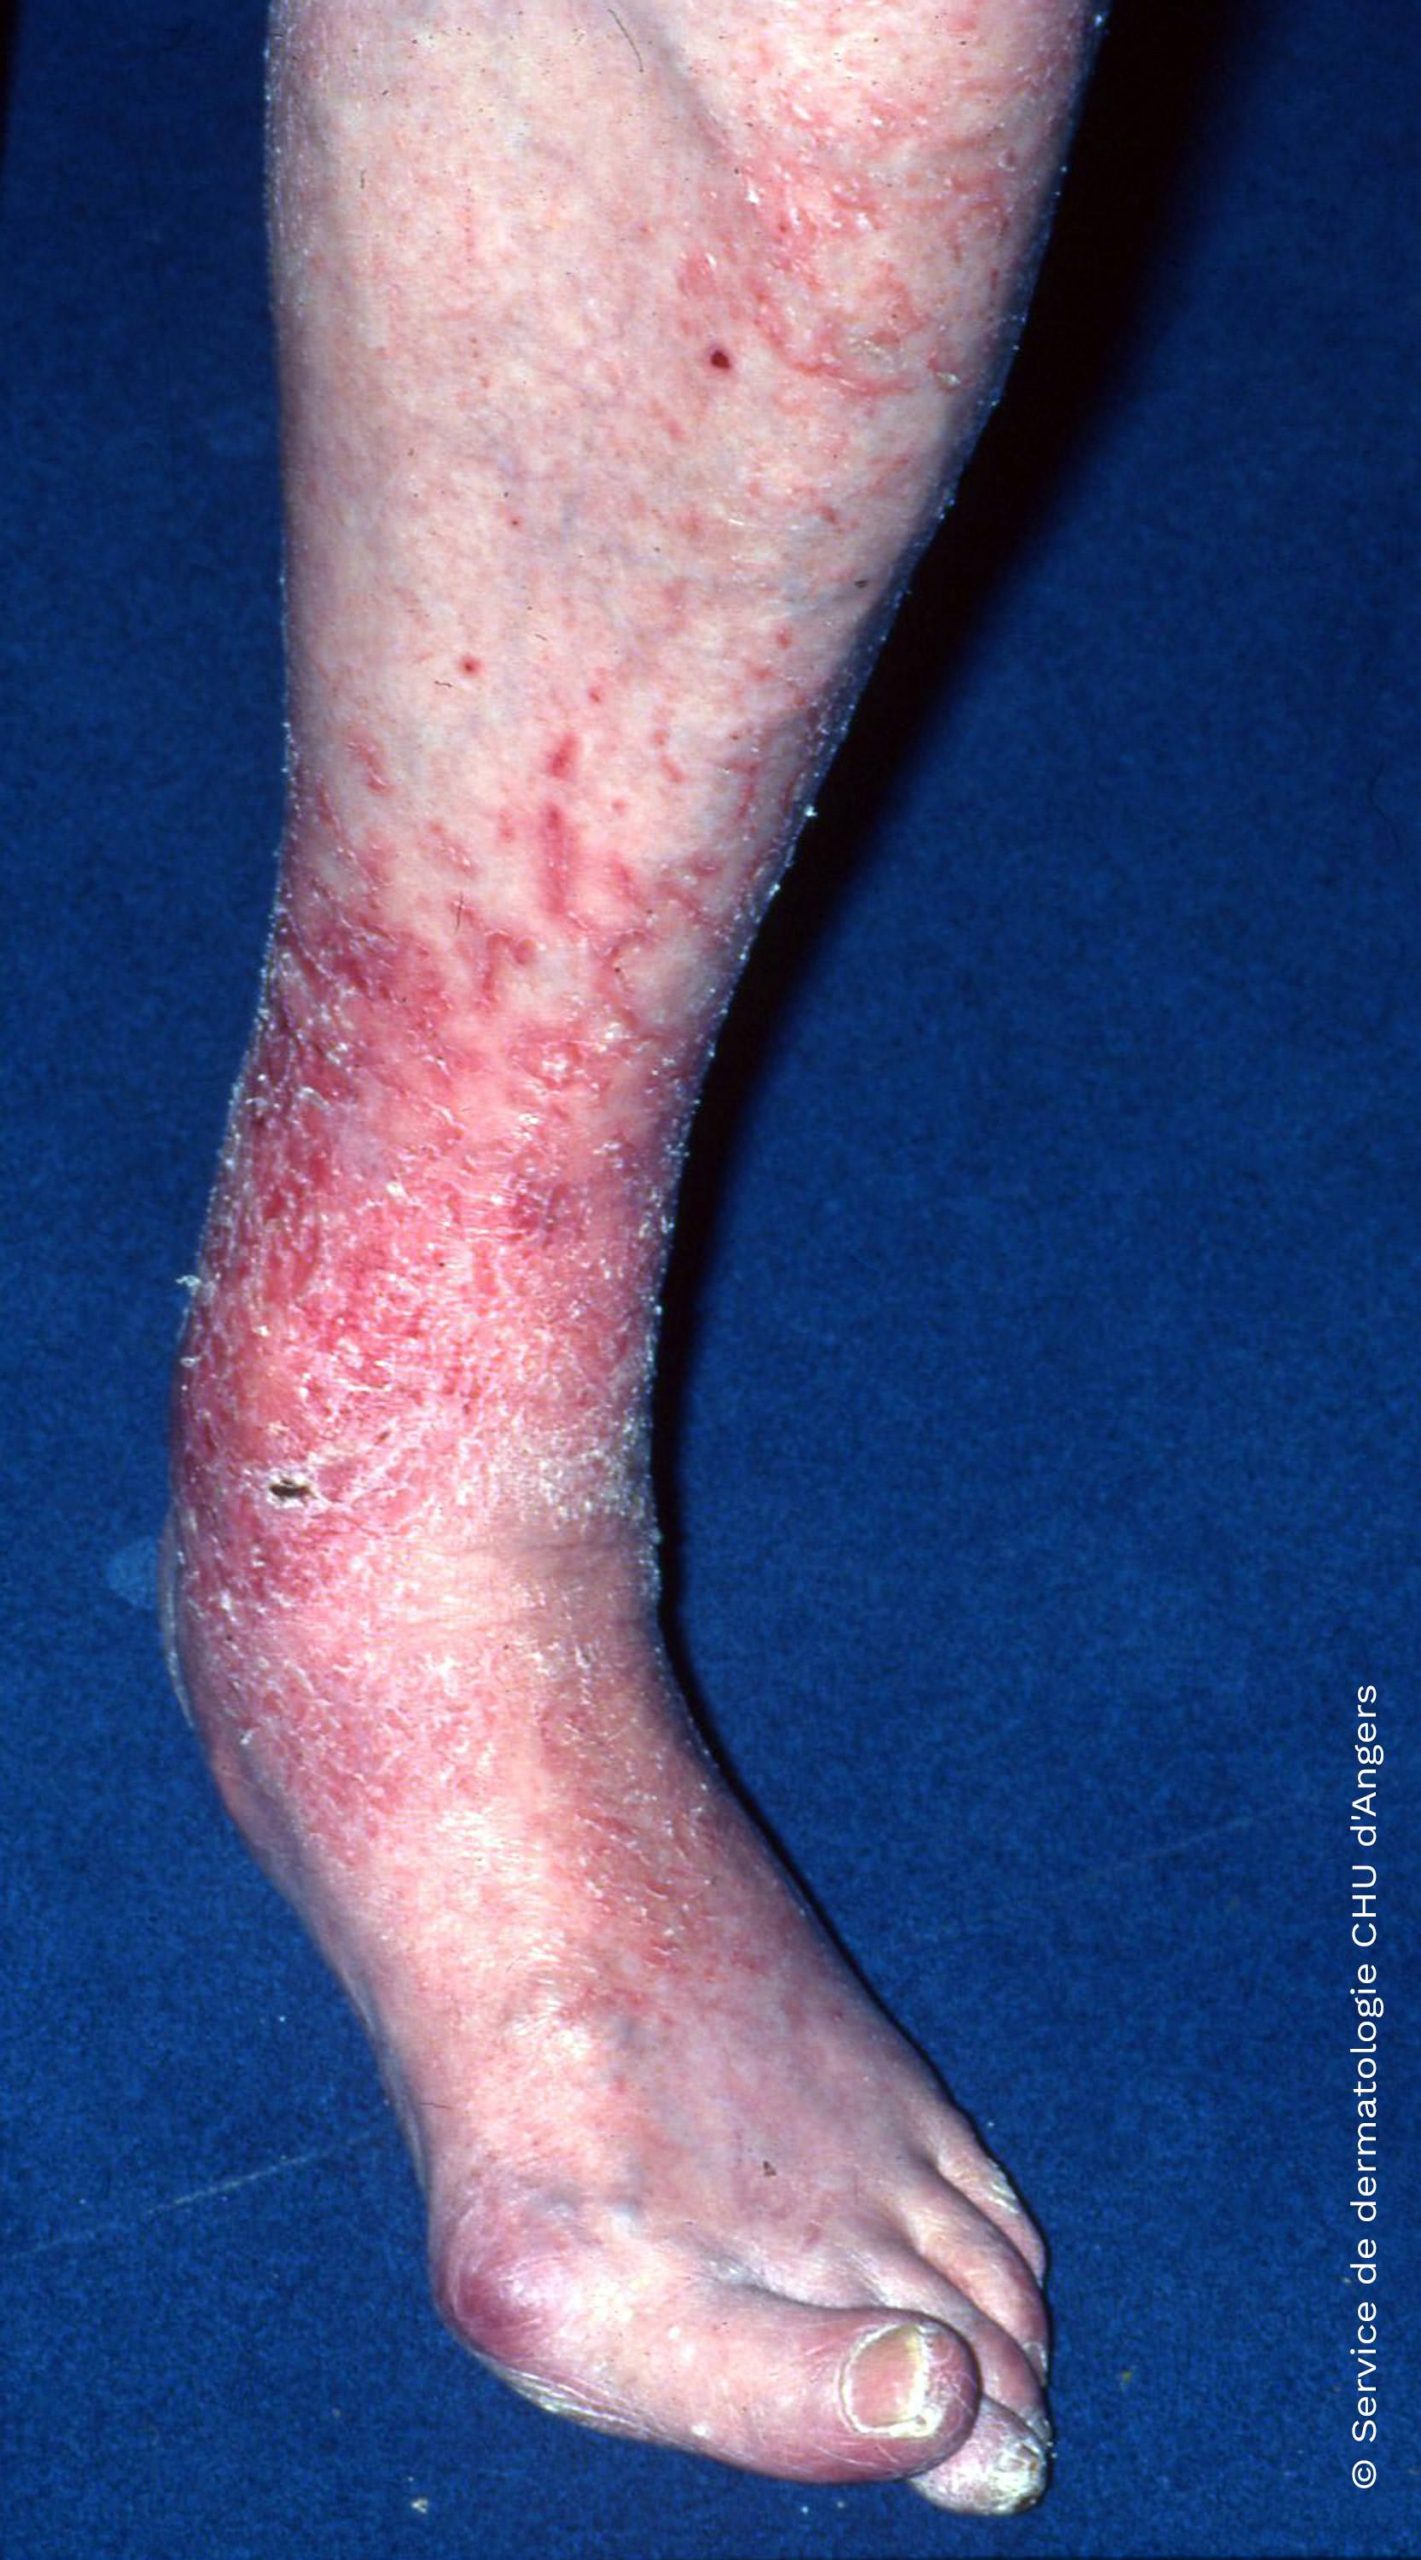 Eczema on the legs